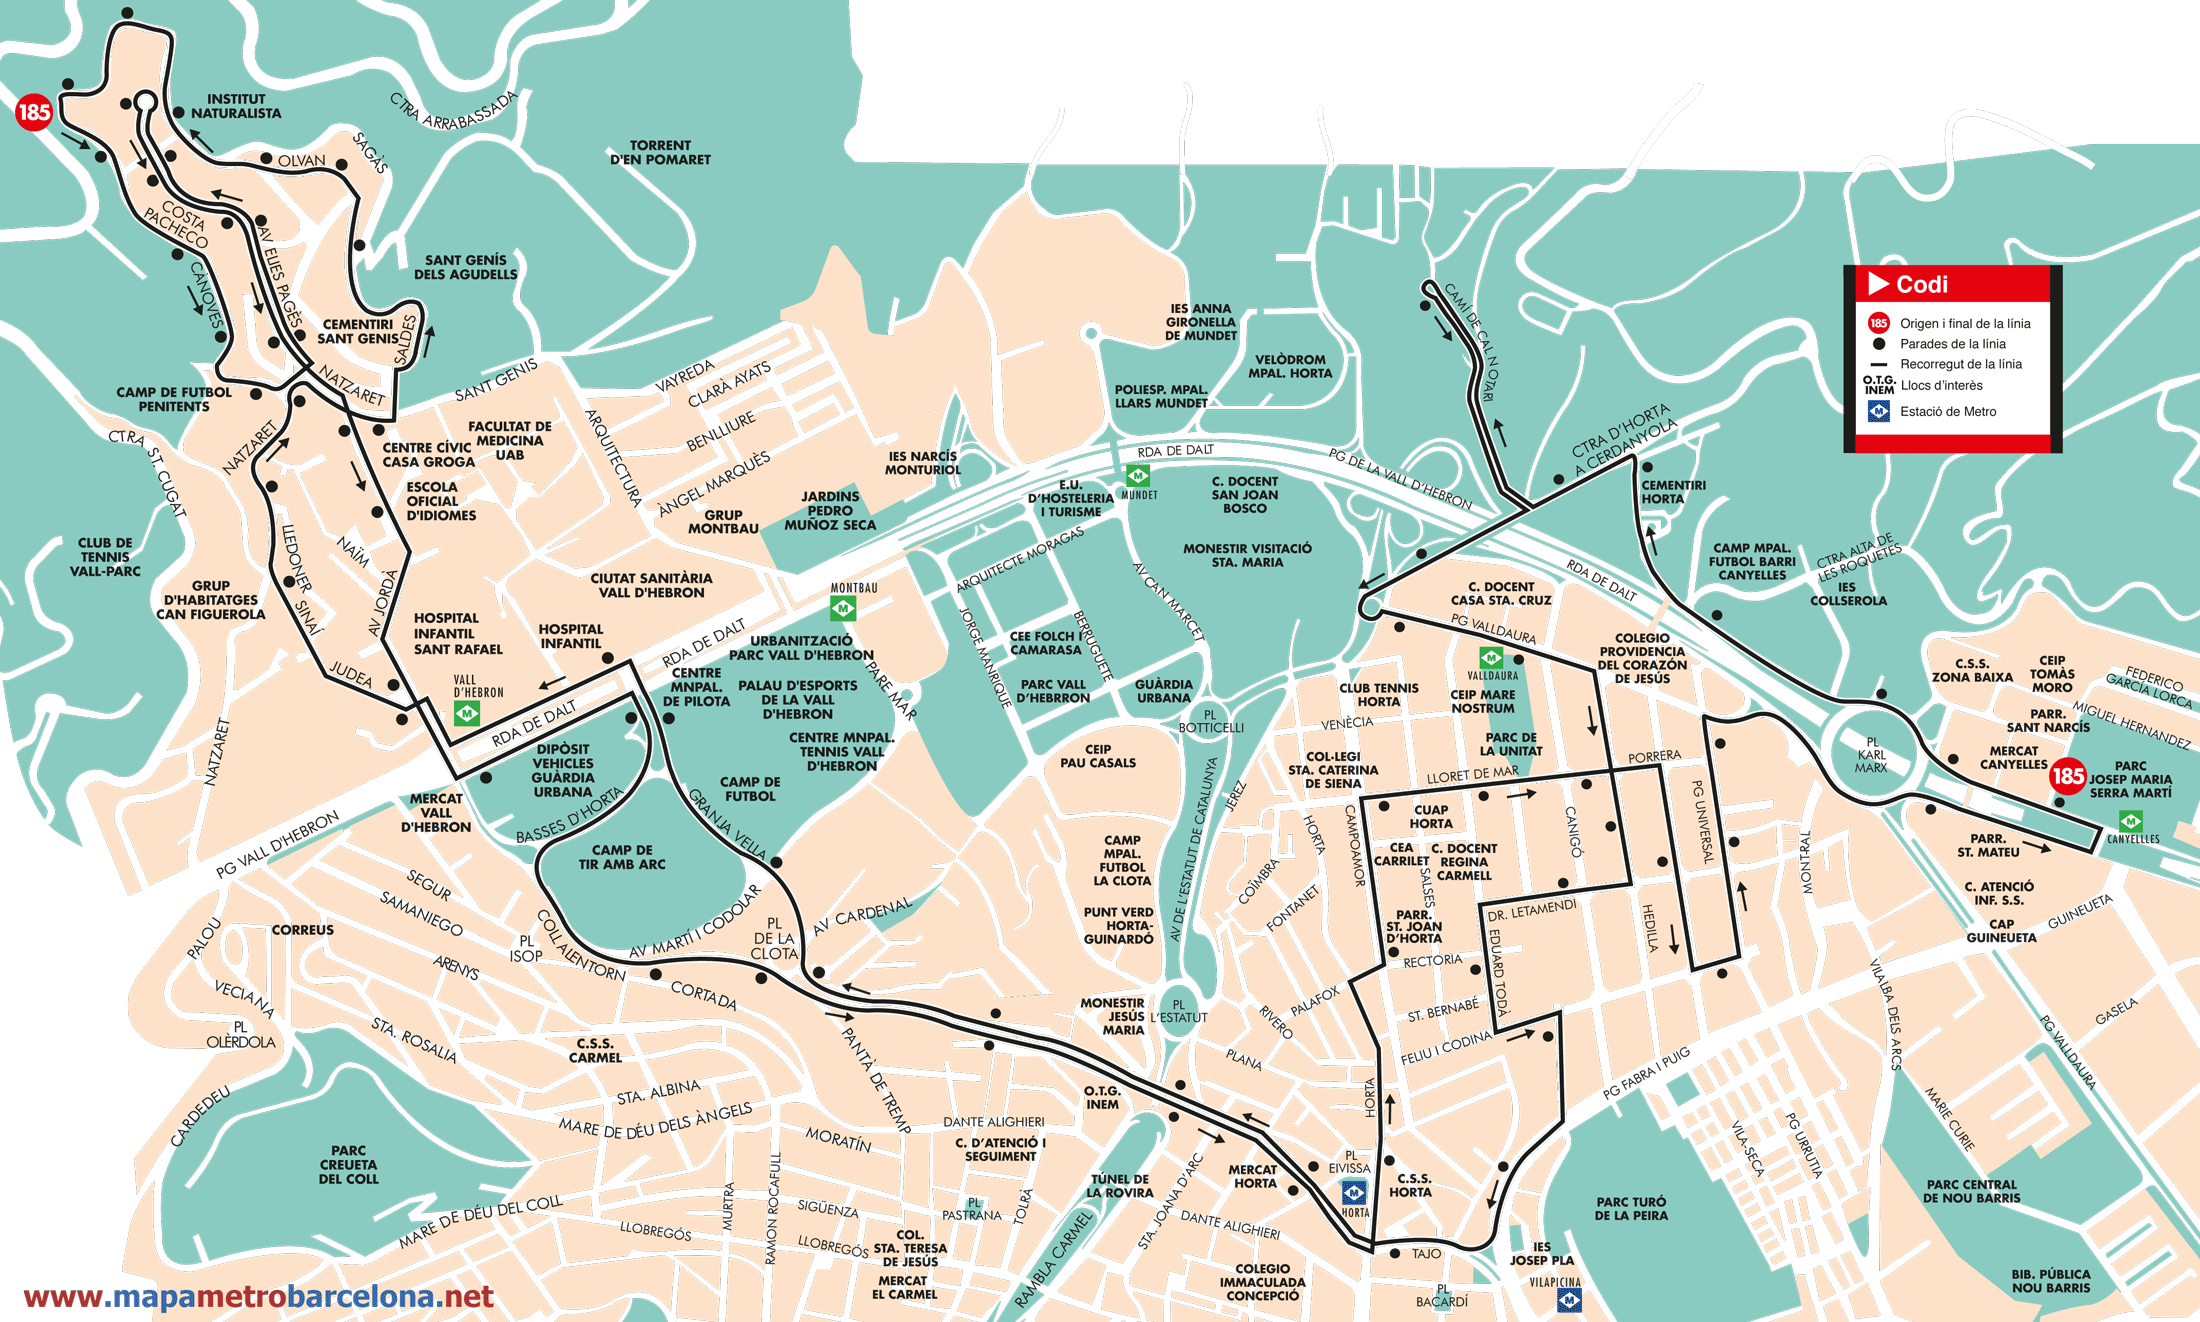 Barcelona bus map line 185